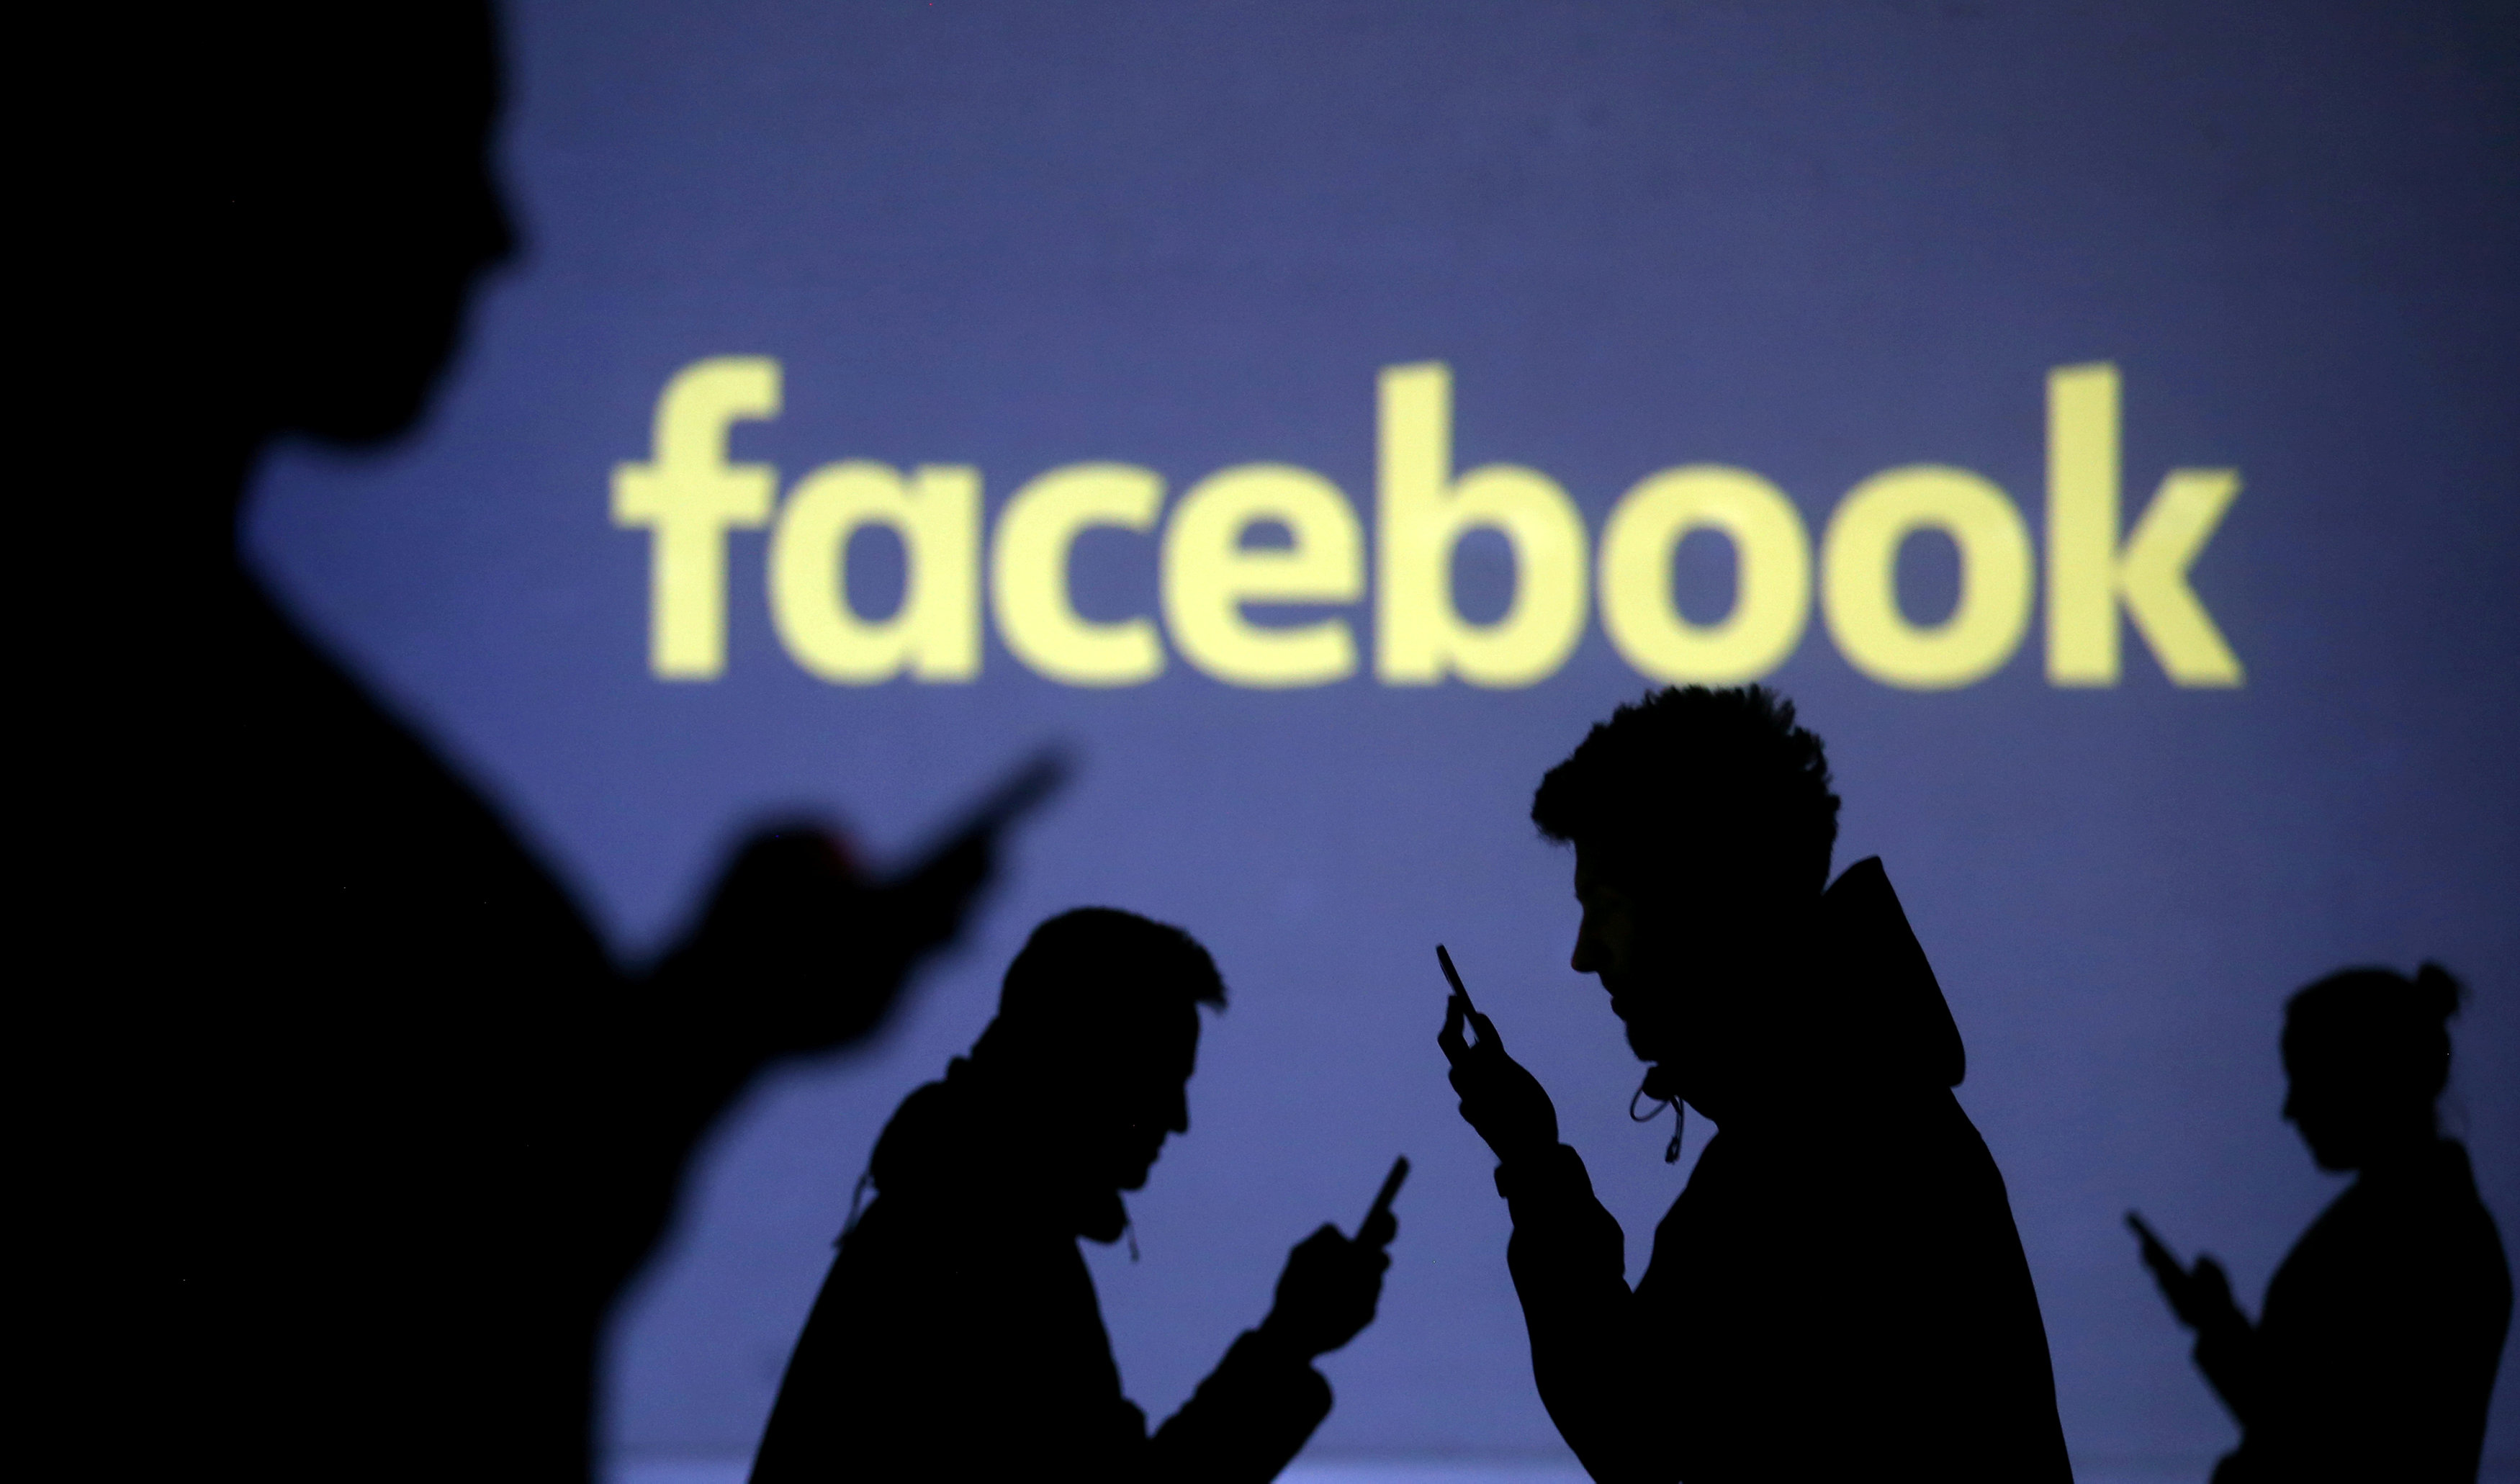 Facebook suspends 200 apps over data misuse investigation